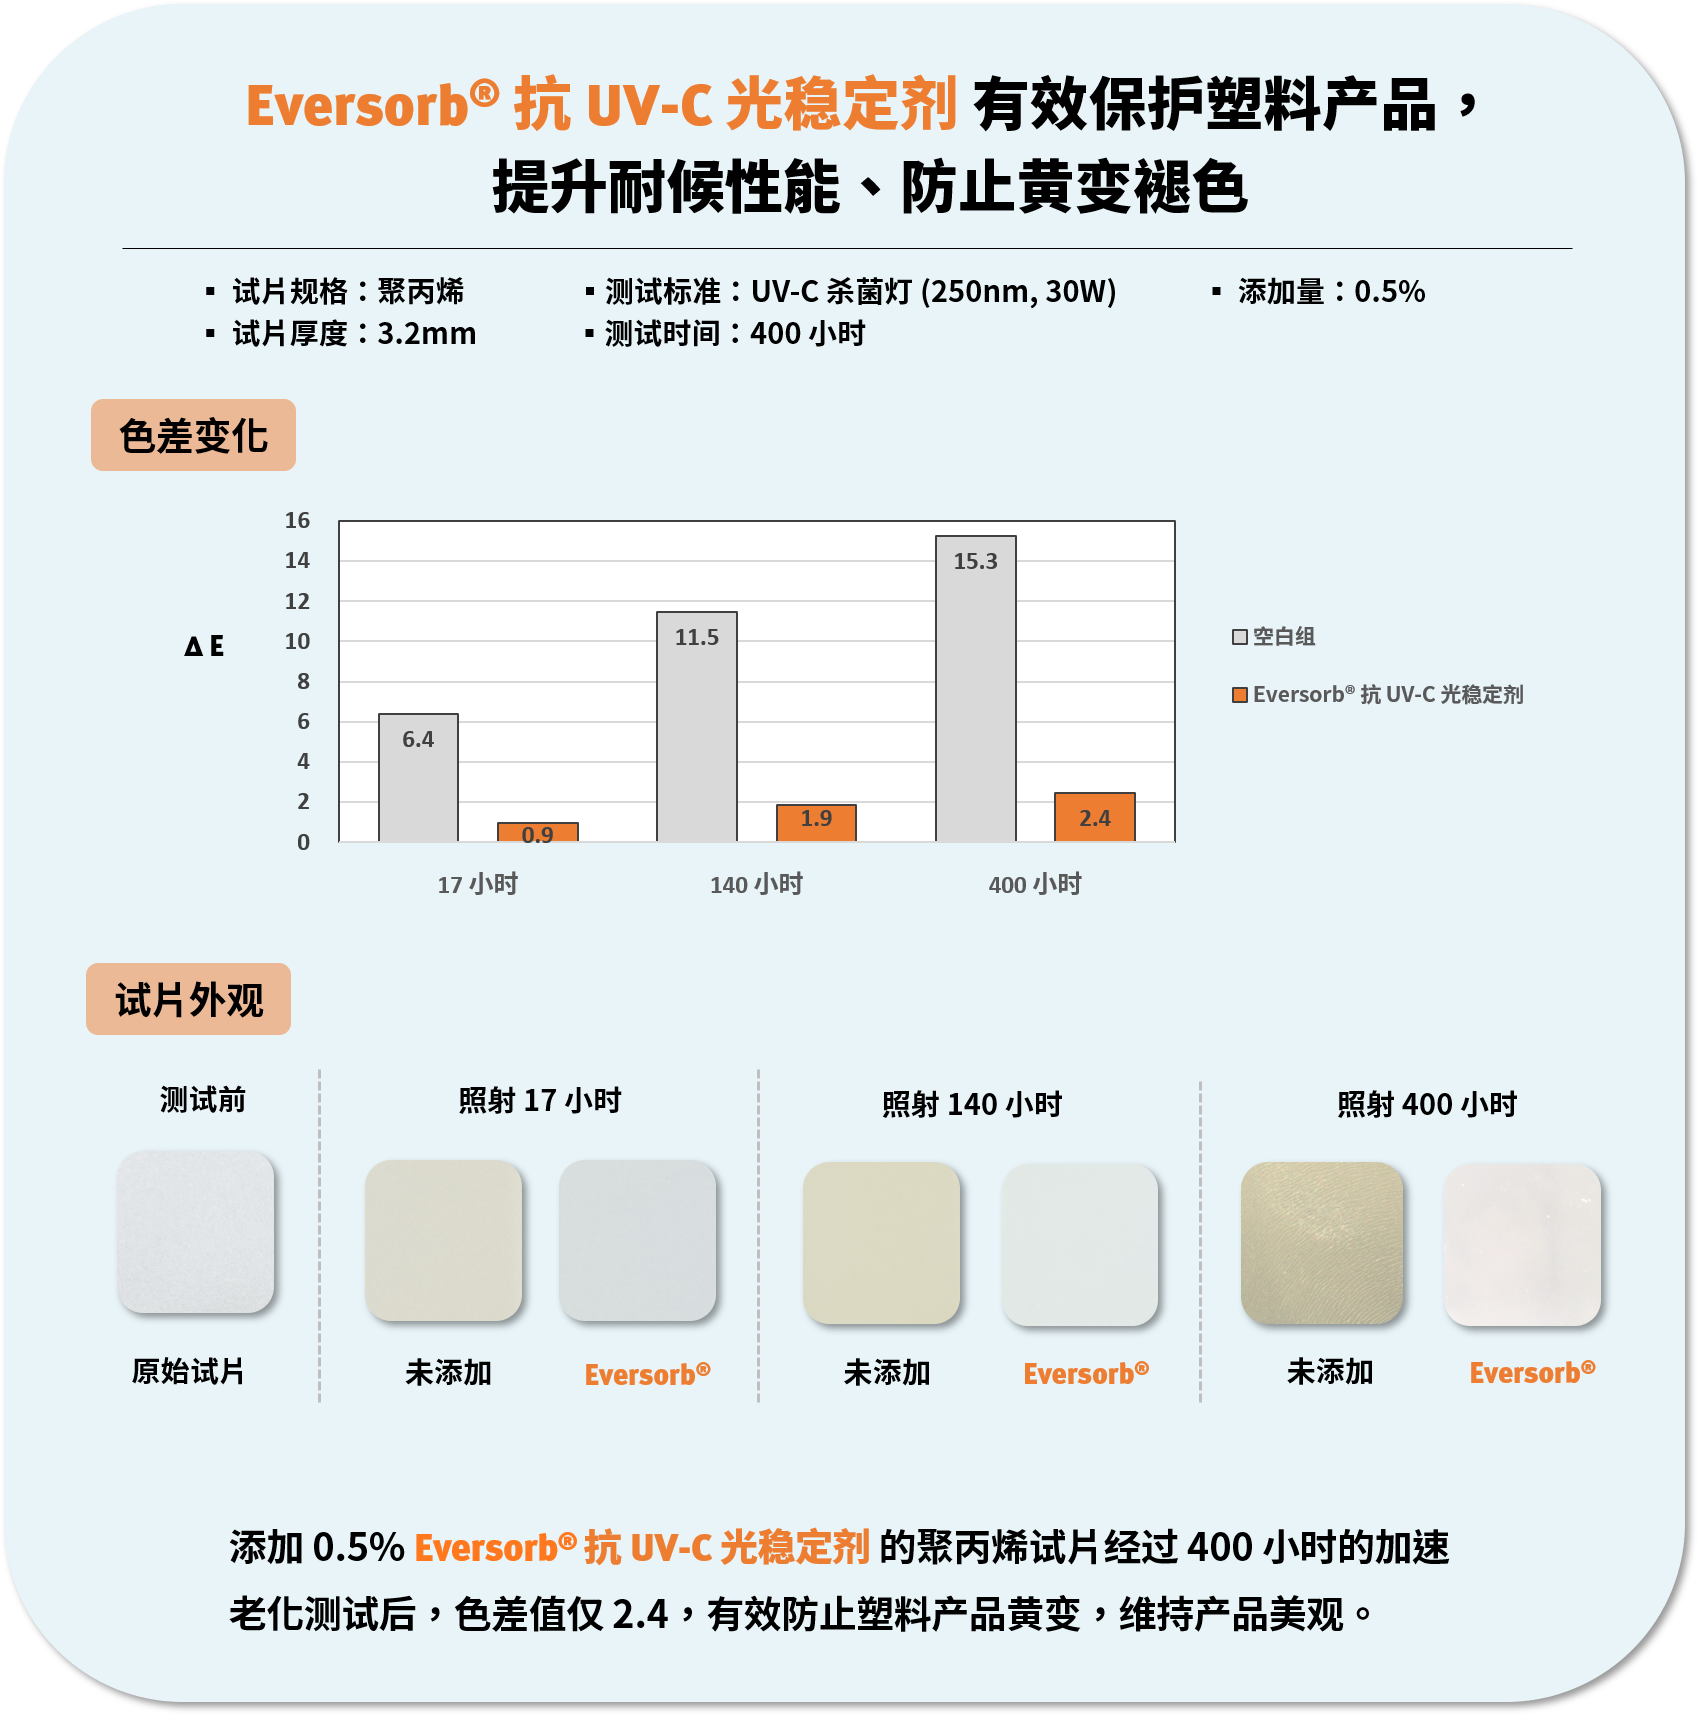 Eversorb® 抗 UV-C 专用光稳定剂